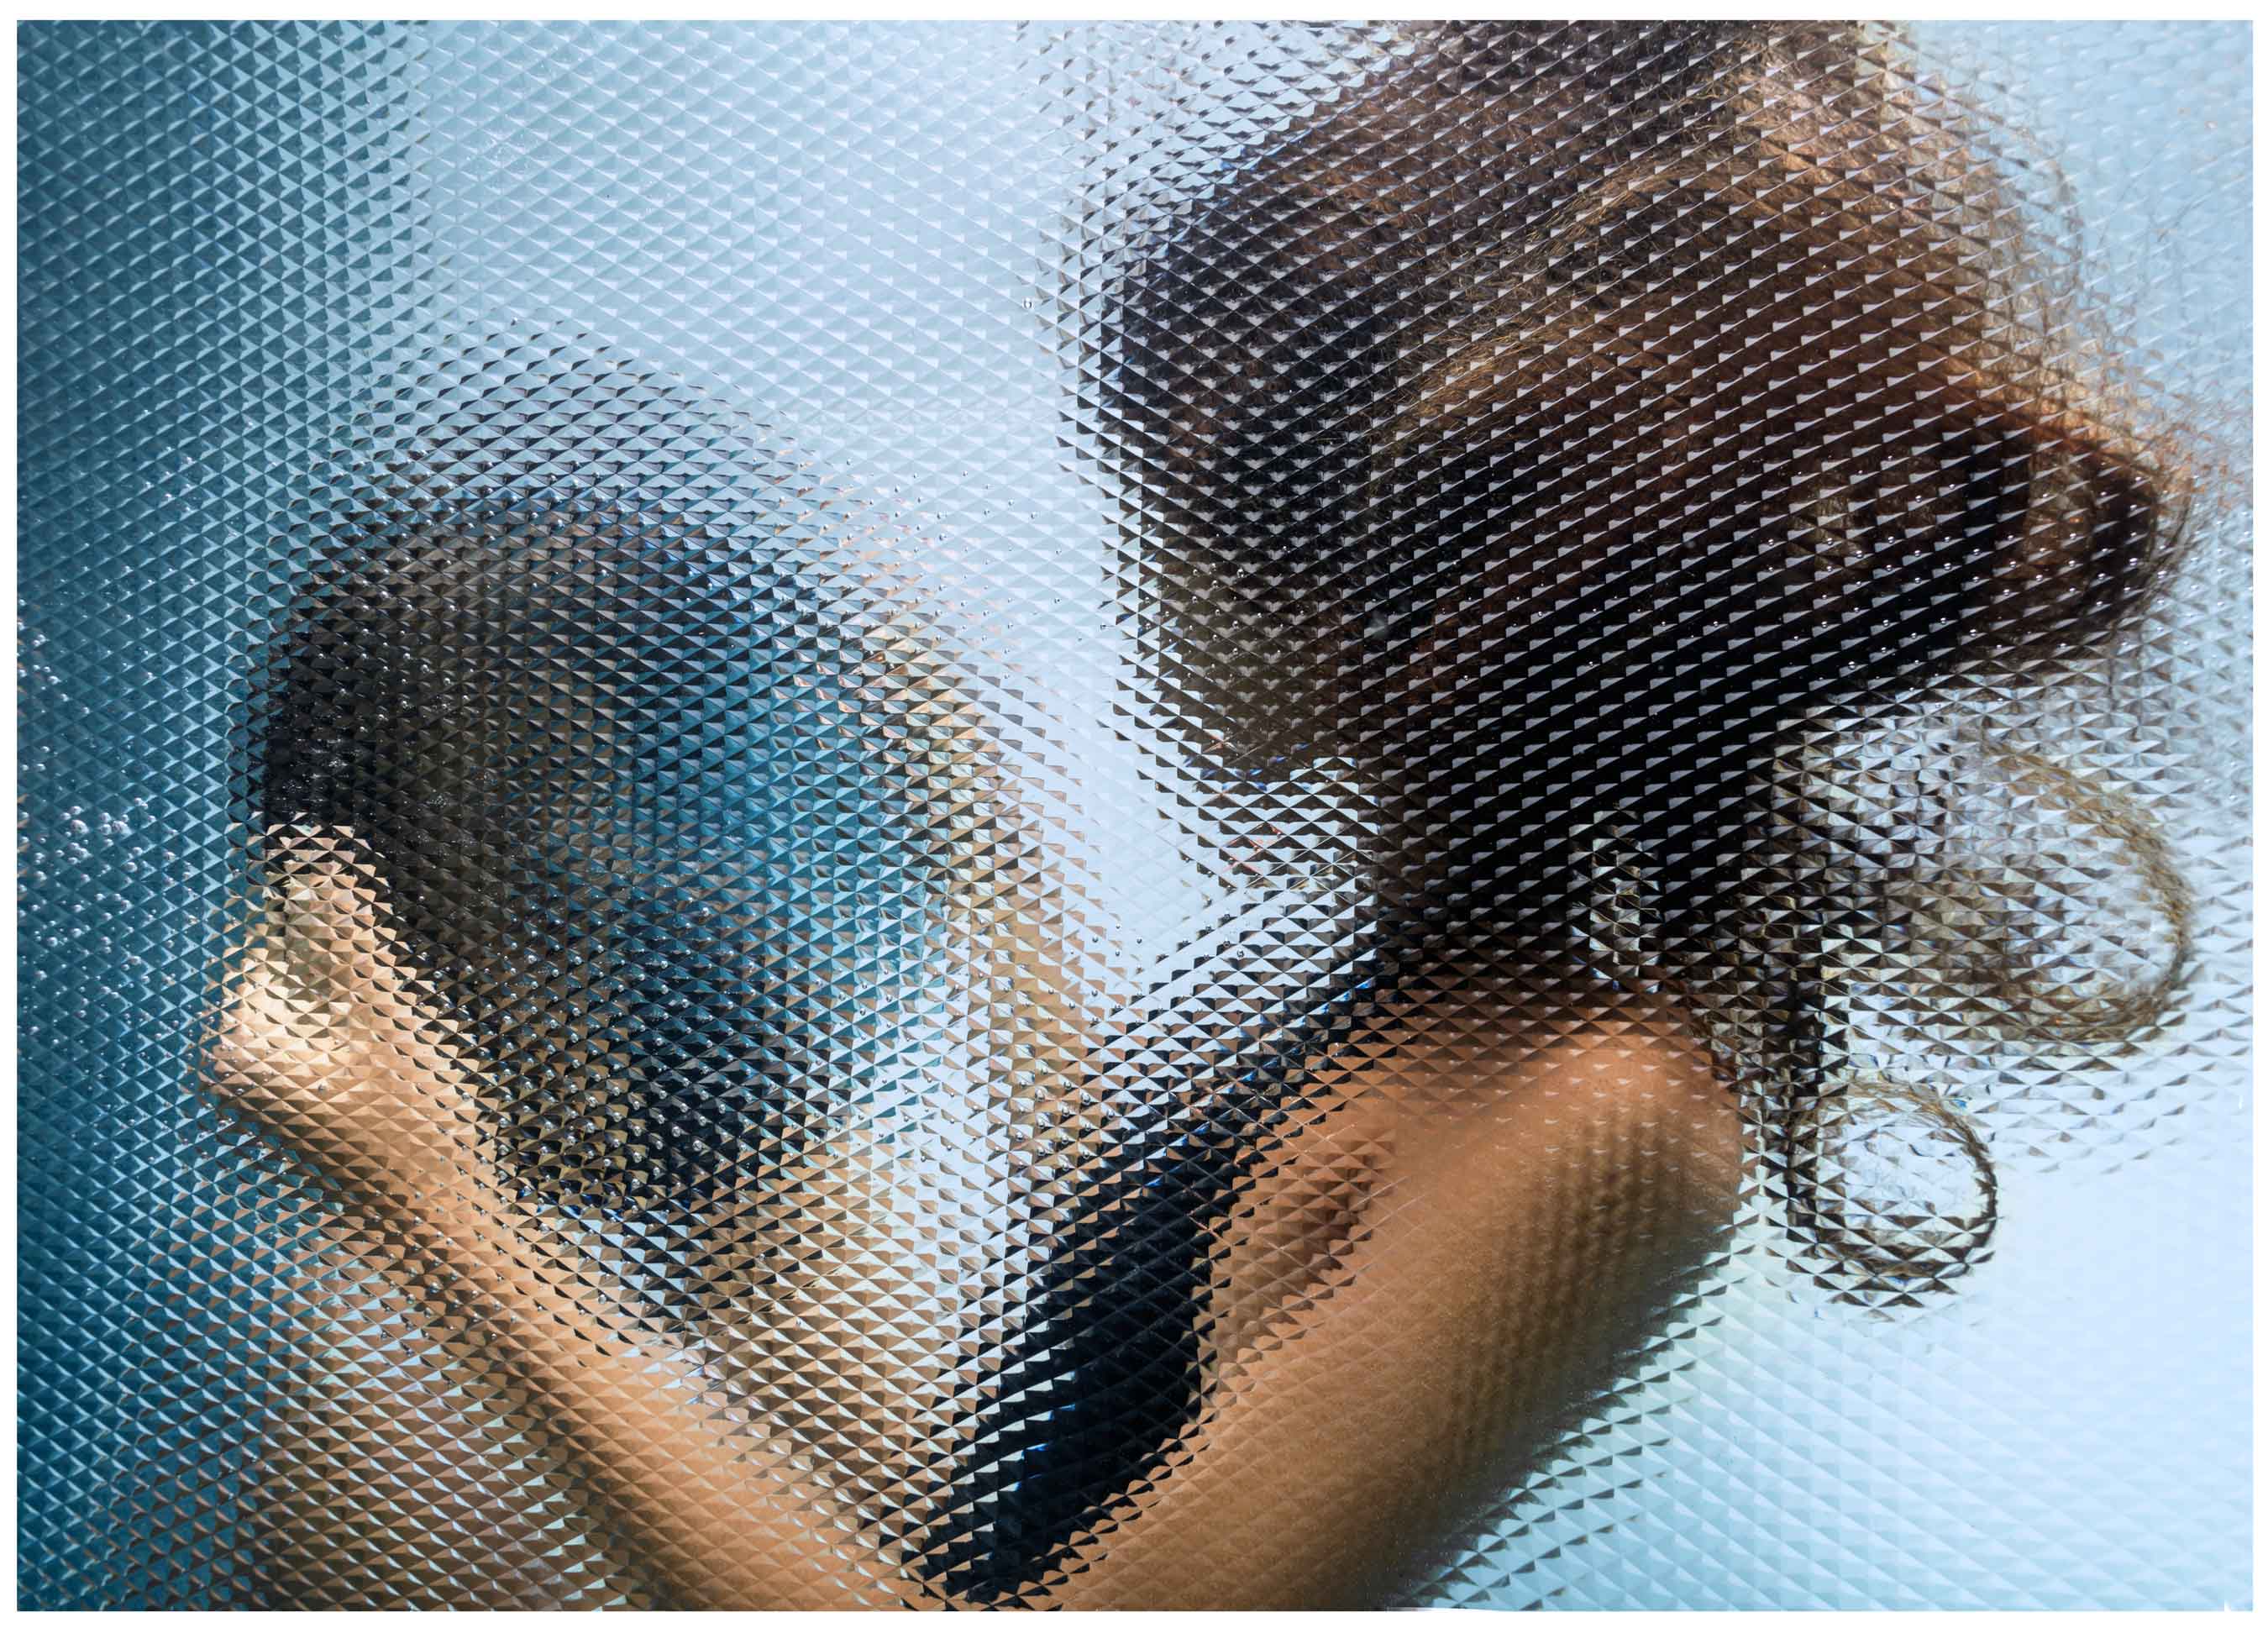 Hive -  Underwater Fashion Photography by Maya Almeida